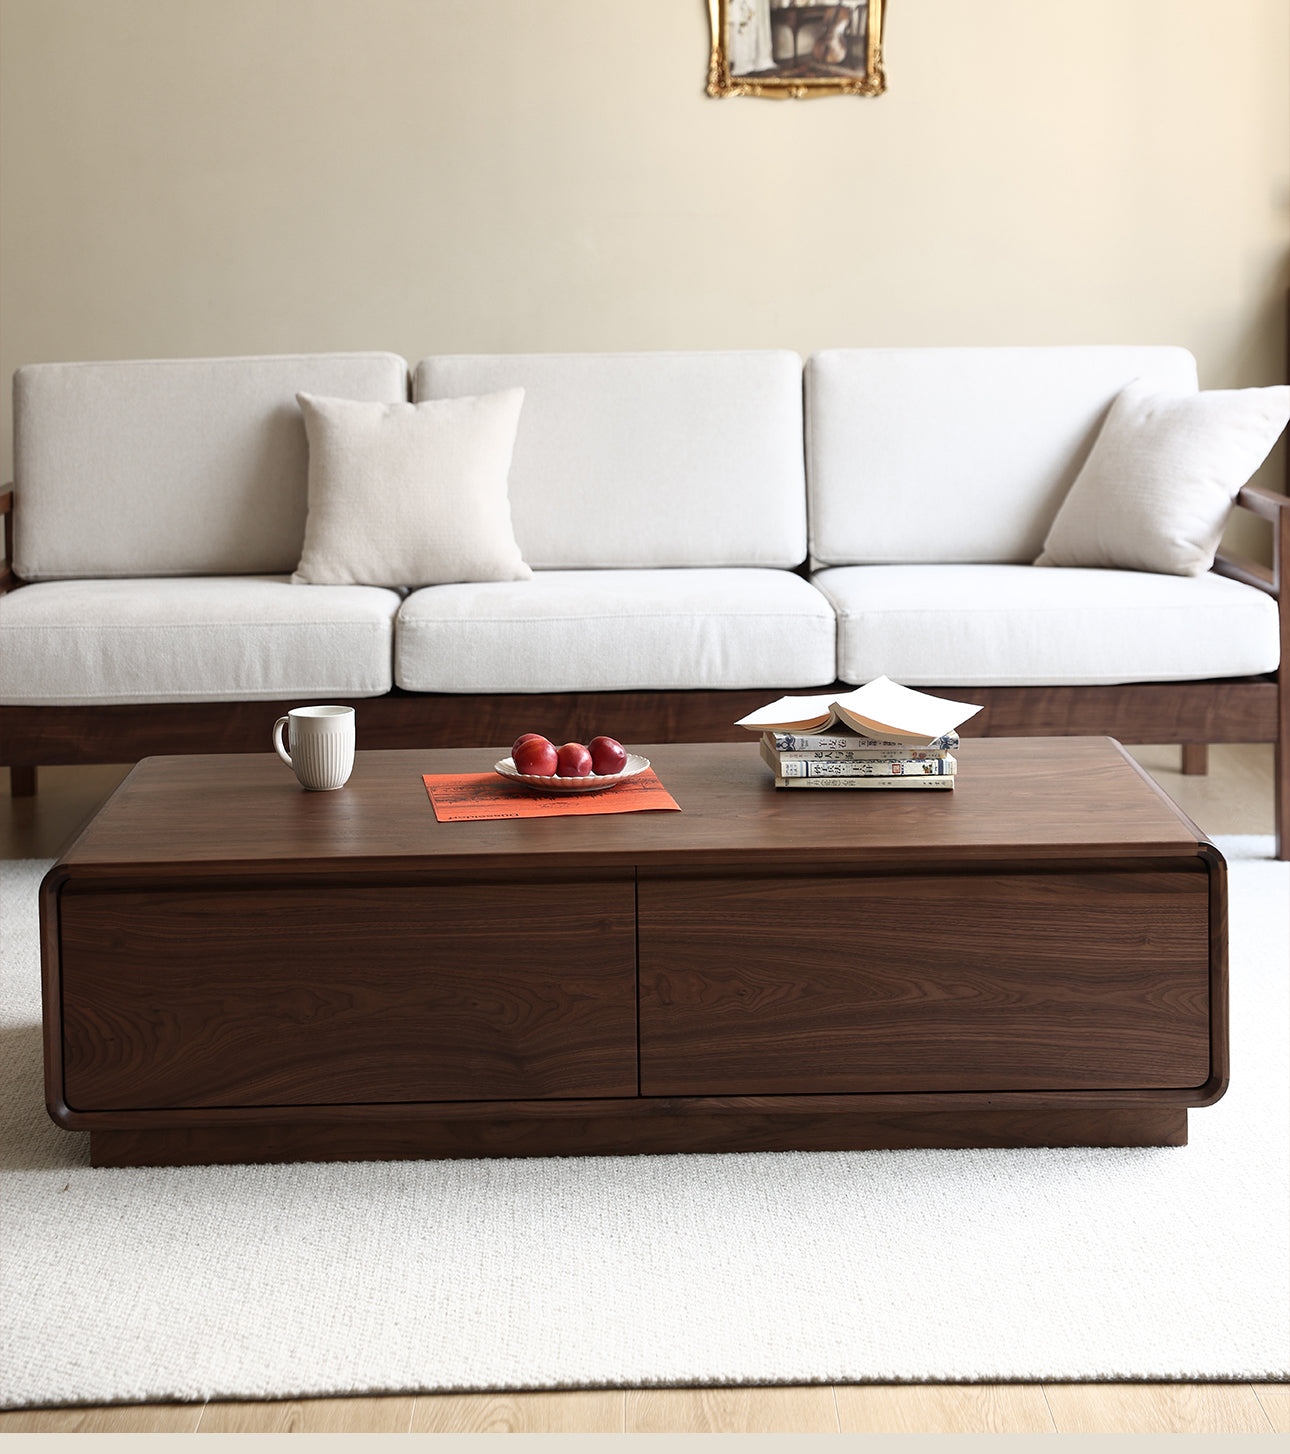 Minimalistic design solid walnut wood coffee table